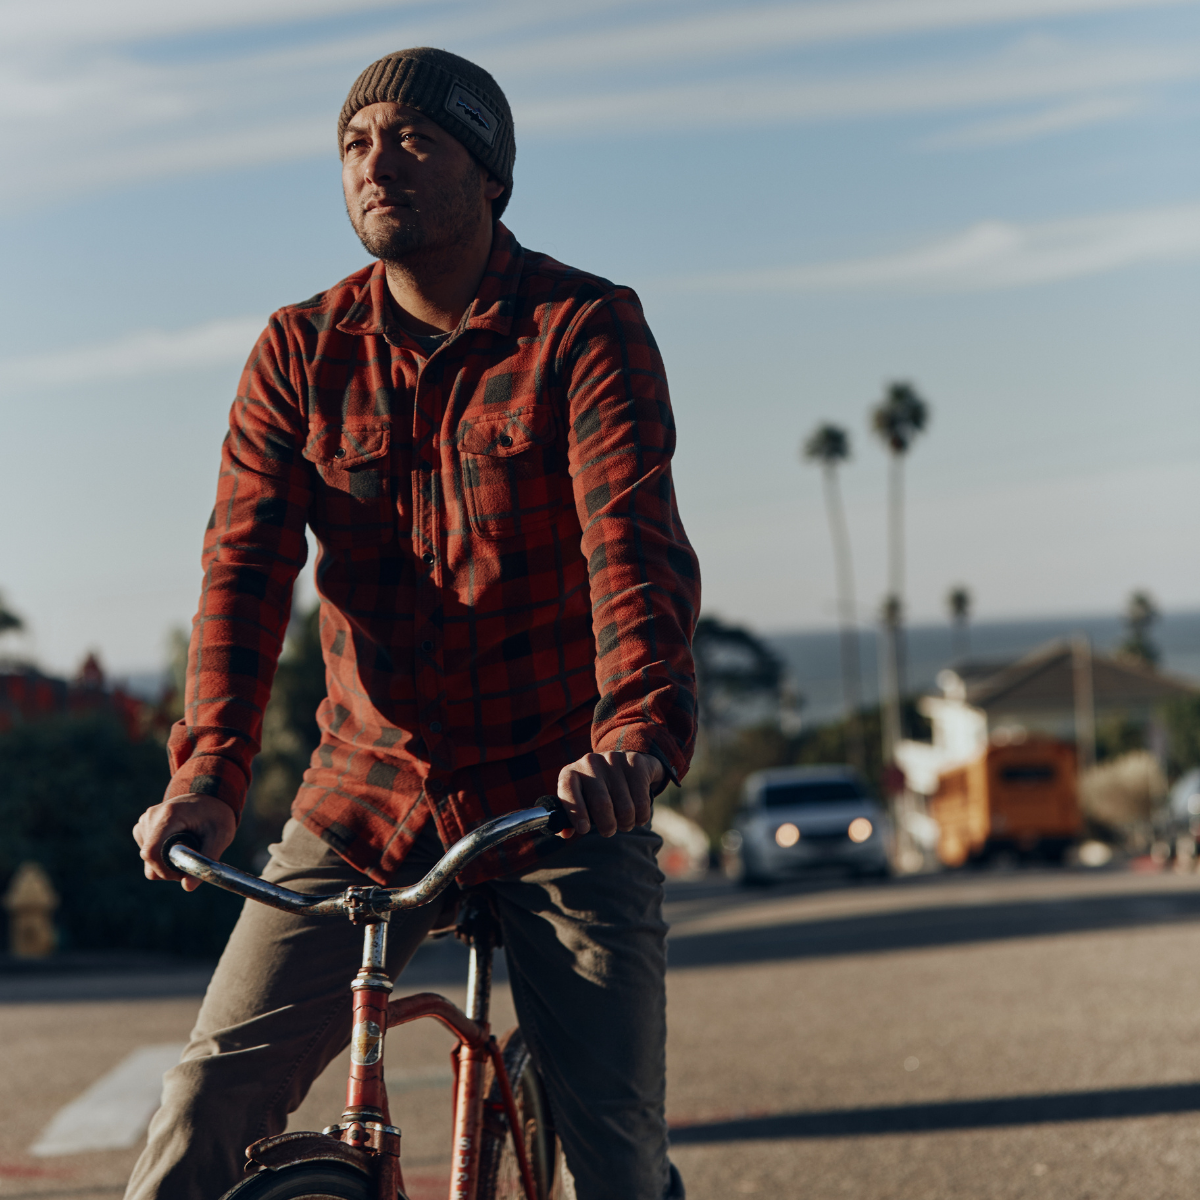 Aaron Jackson riding bike in Cayucos, California